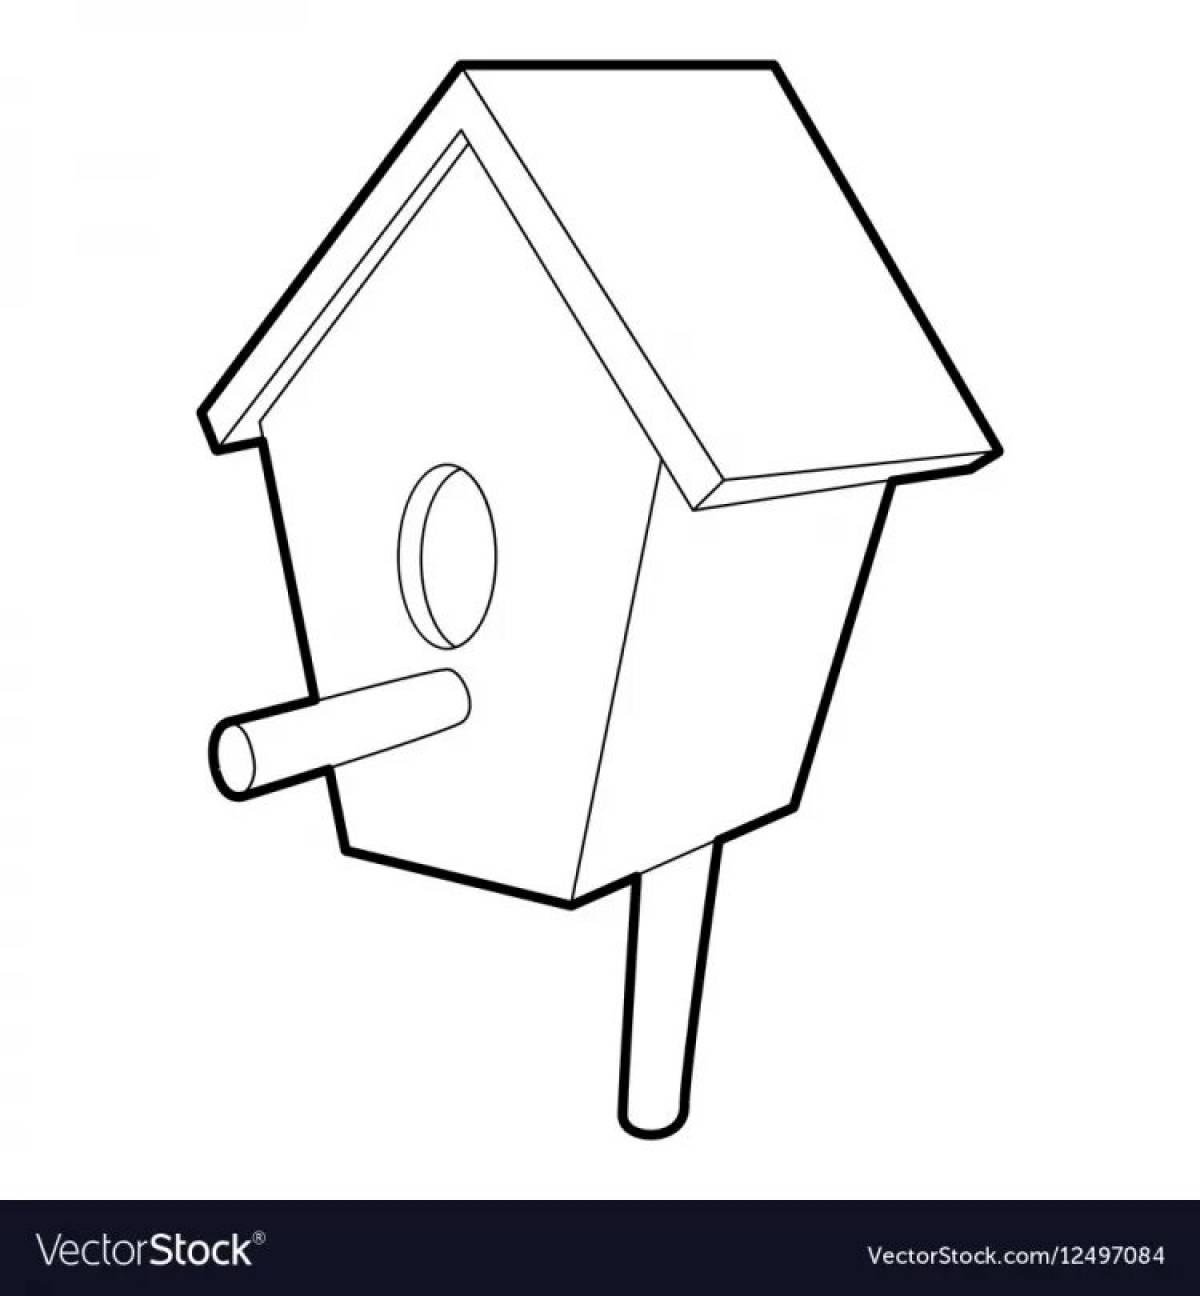 Birdhouse for kids #15